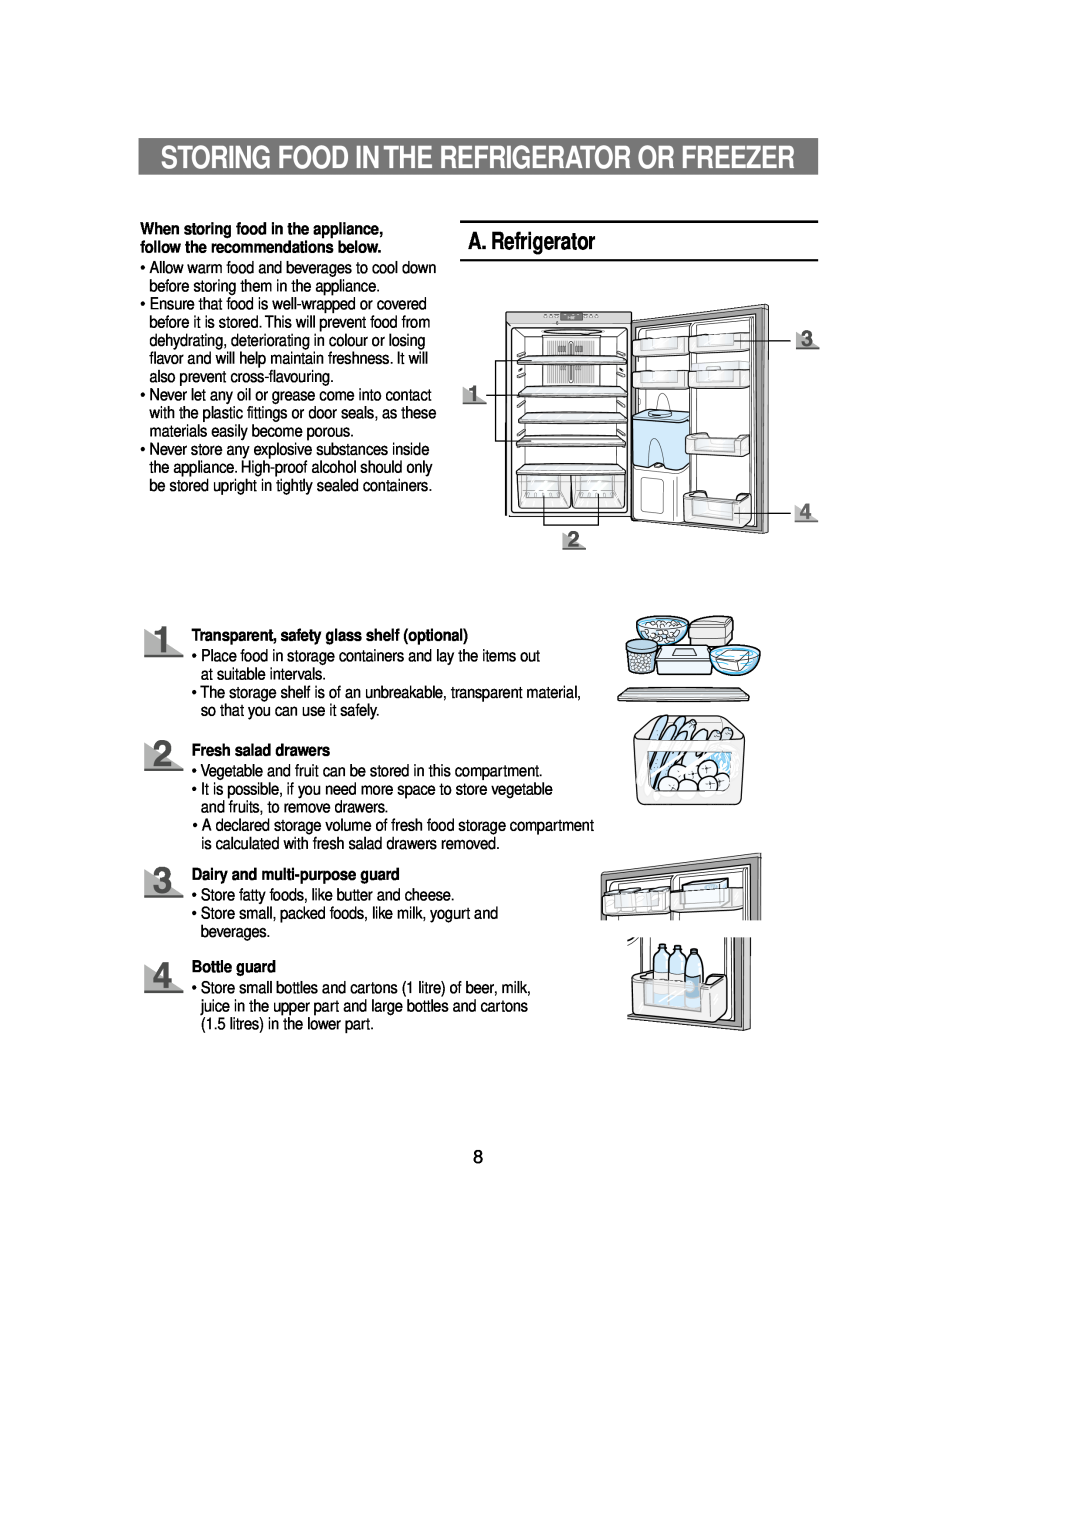 Samsung Rl 39 manual A. Refrigerator, Storing Food In The Refrigerator Or Freezer, Transparent, safety glass shelf optional 